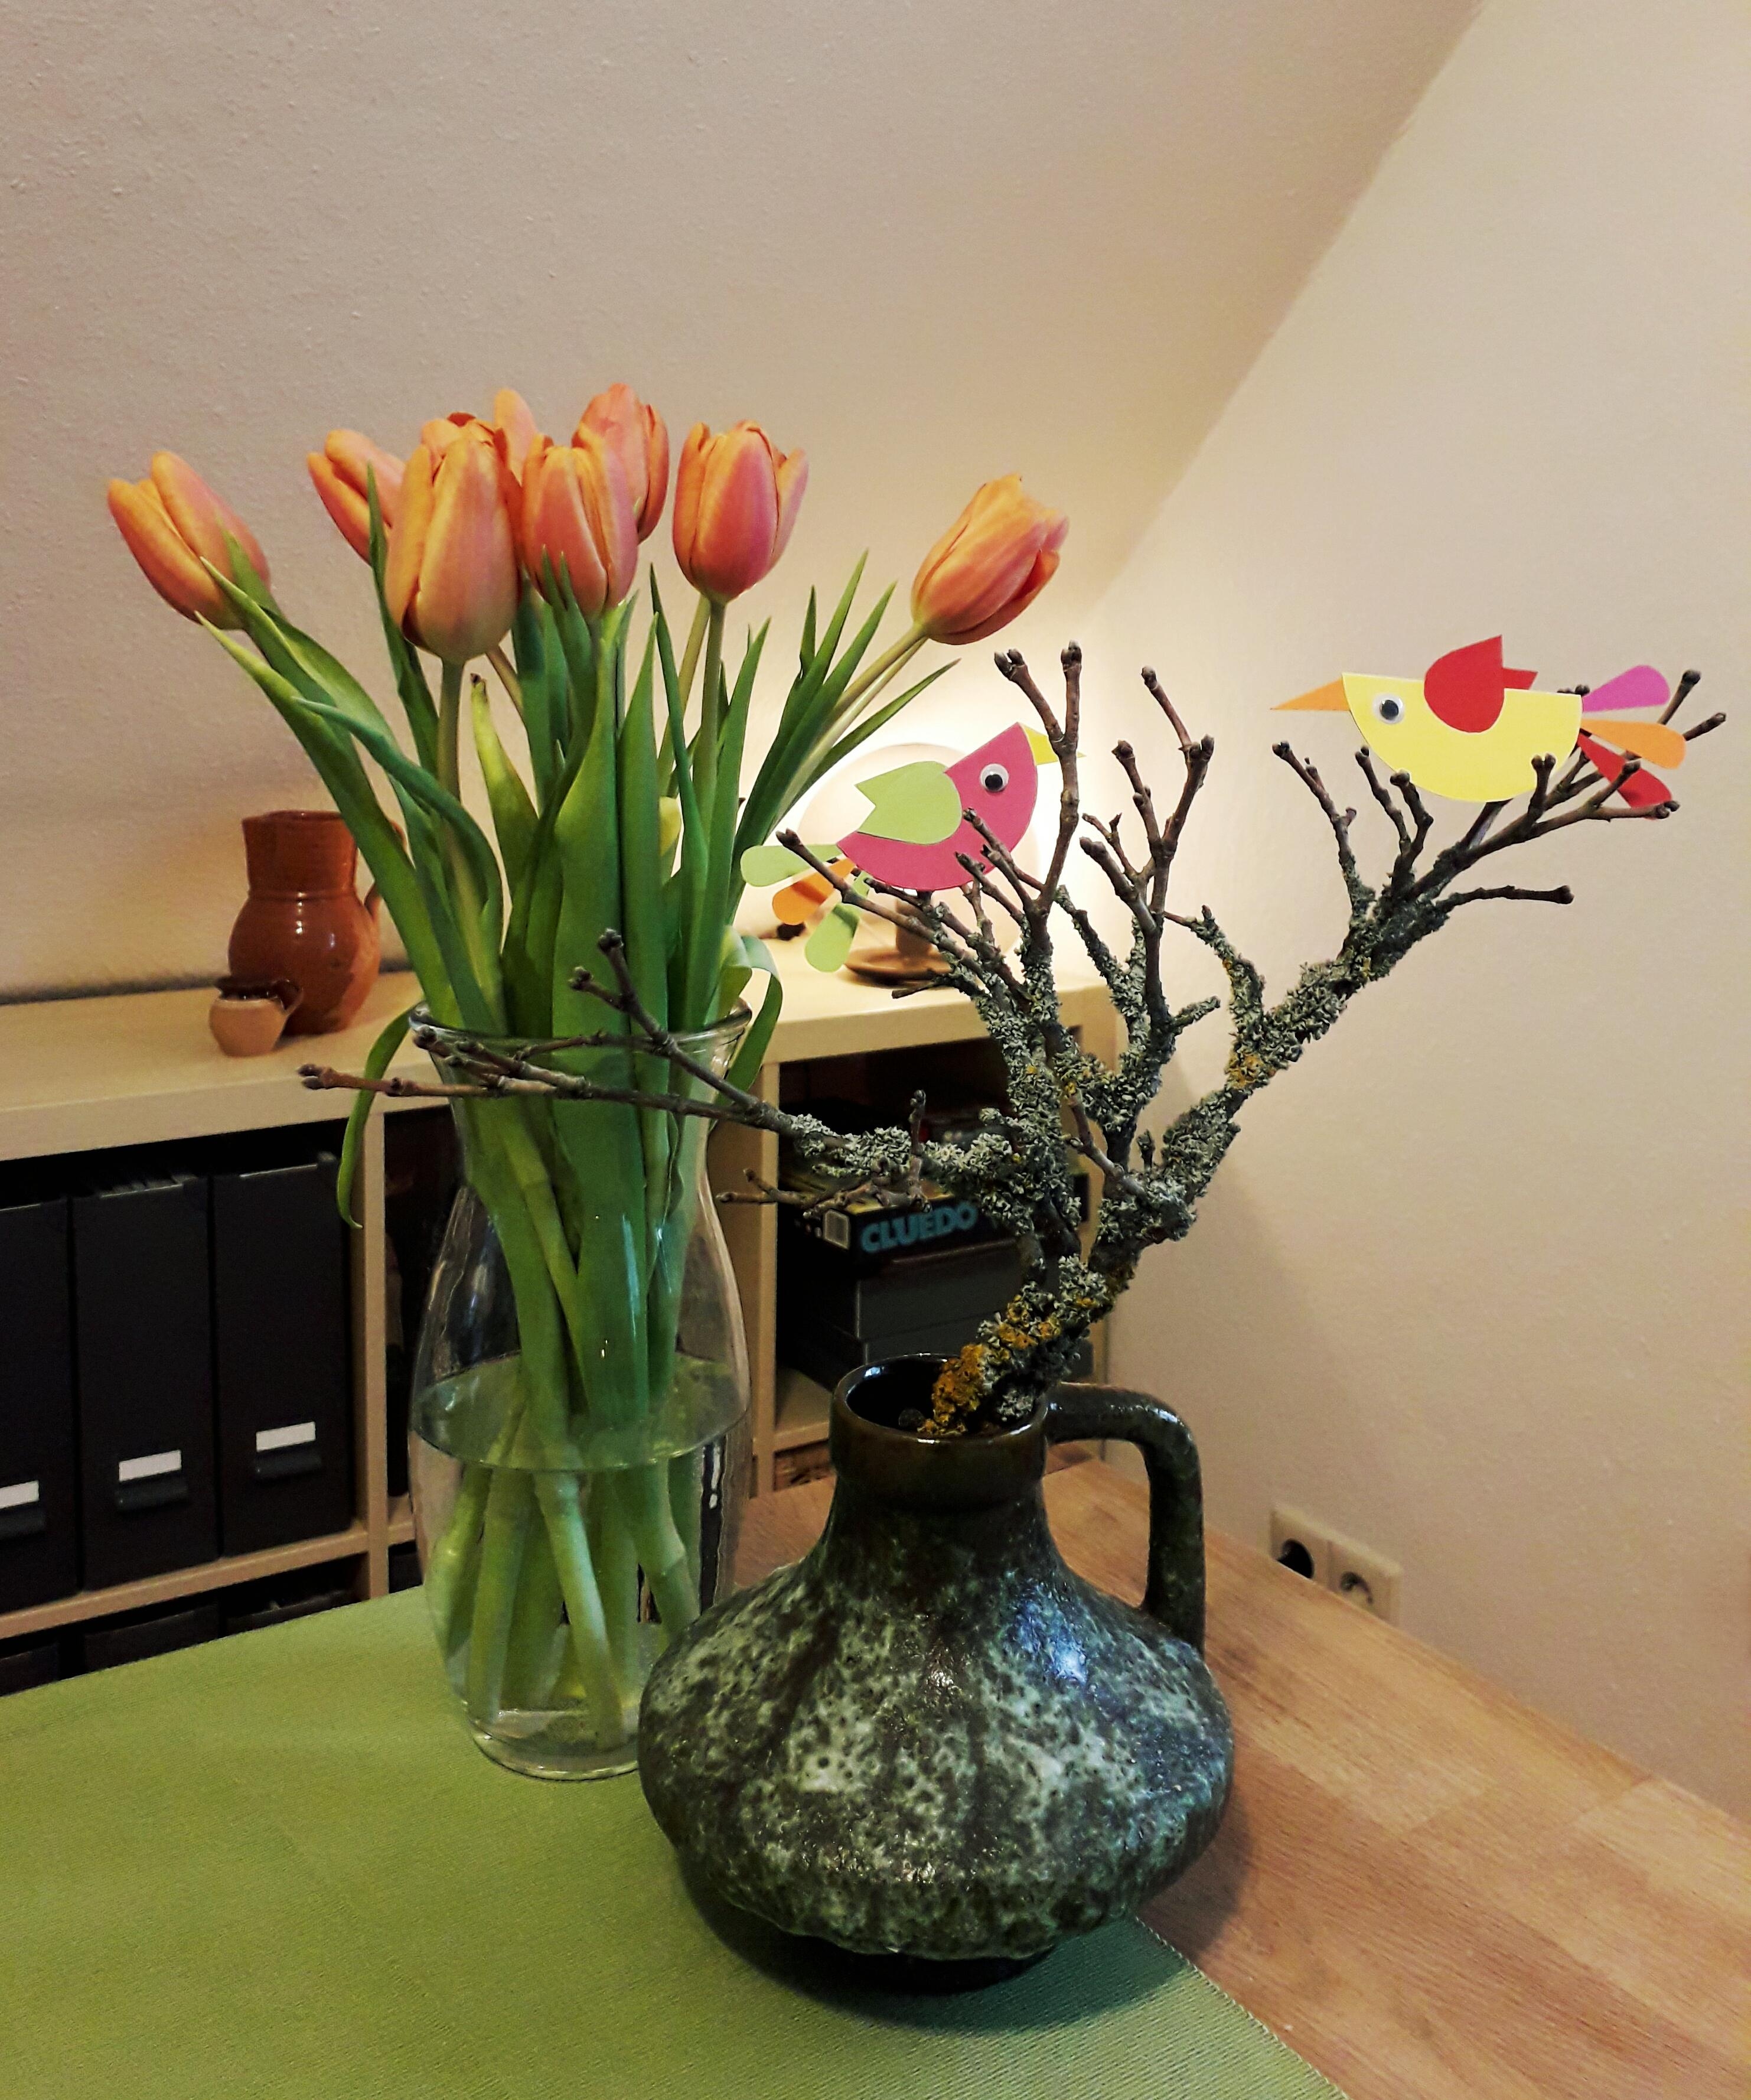 Fresh Flower Friday 🌷🌷🌷
#freshflowerfriday #tulpen #ast #vase #papiervogel